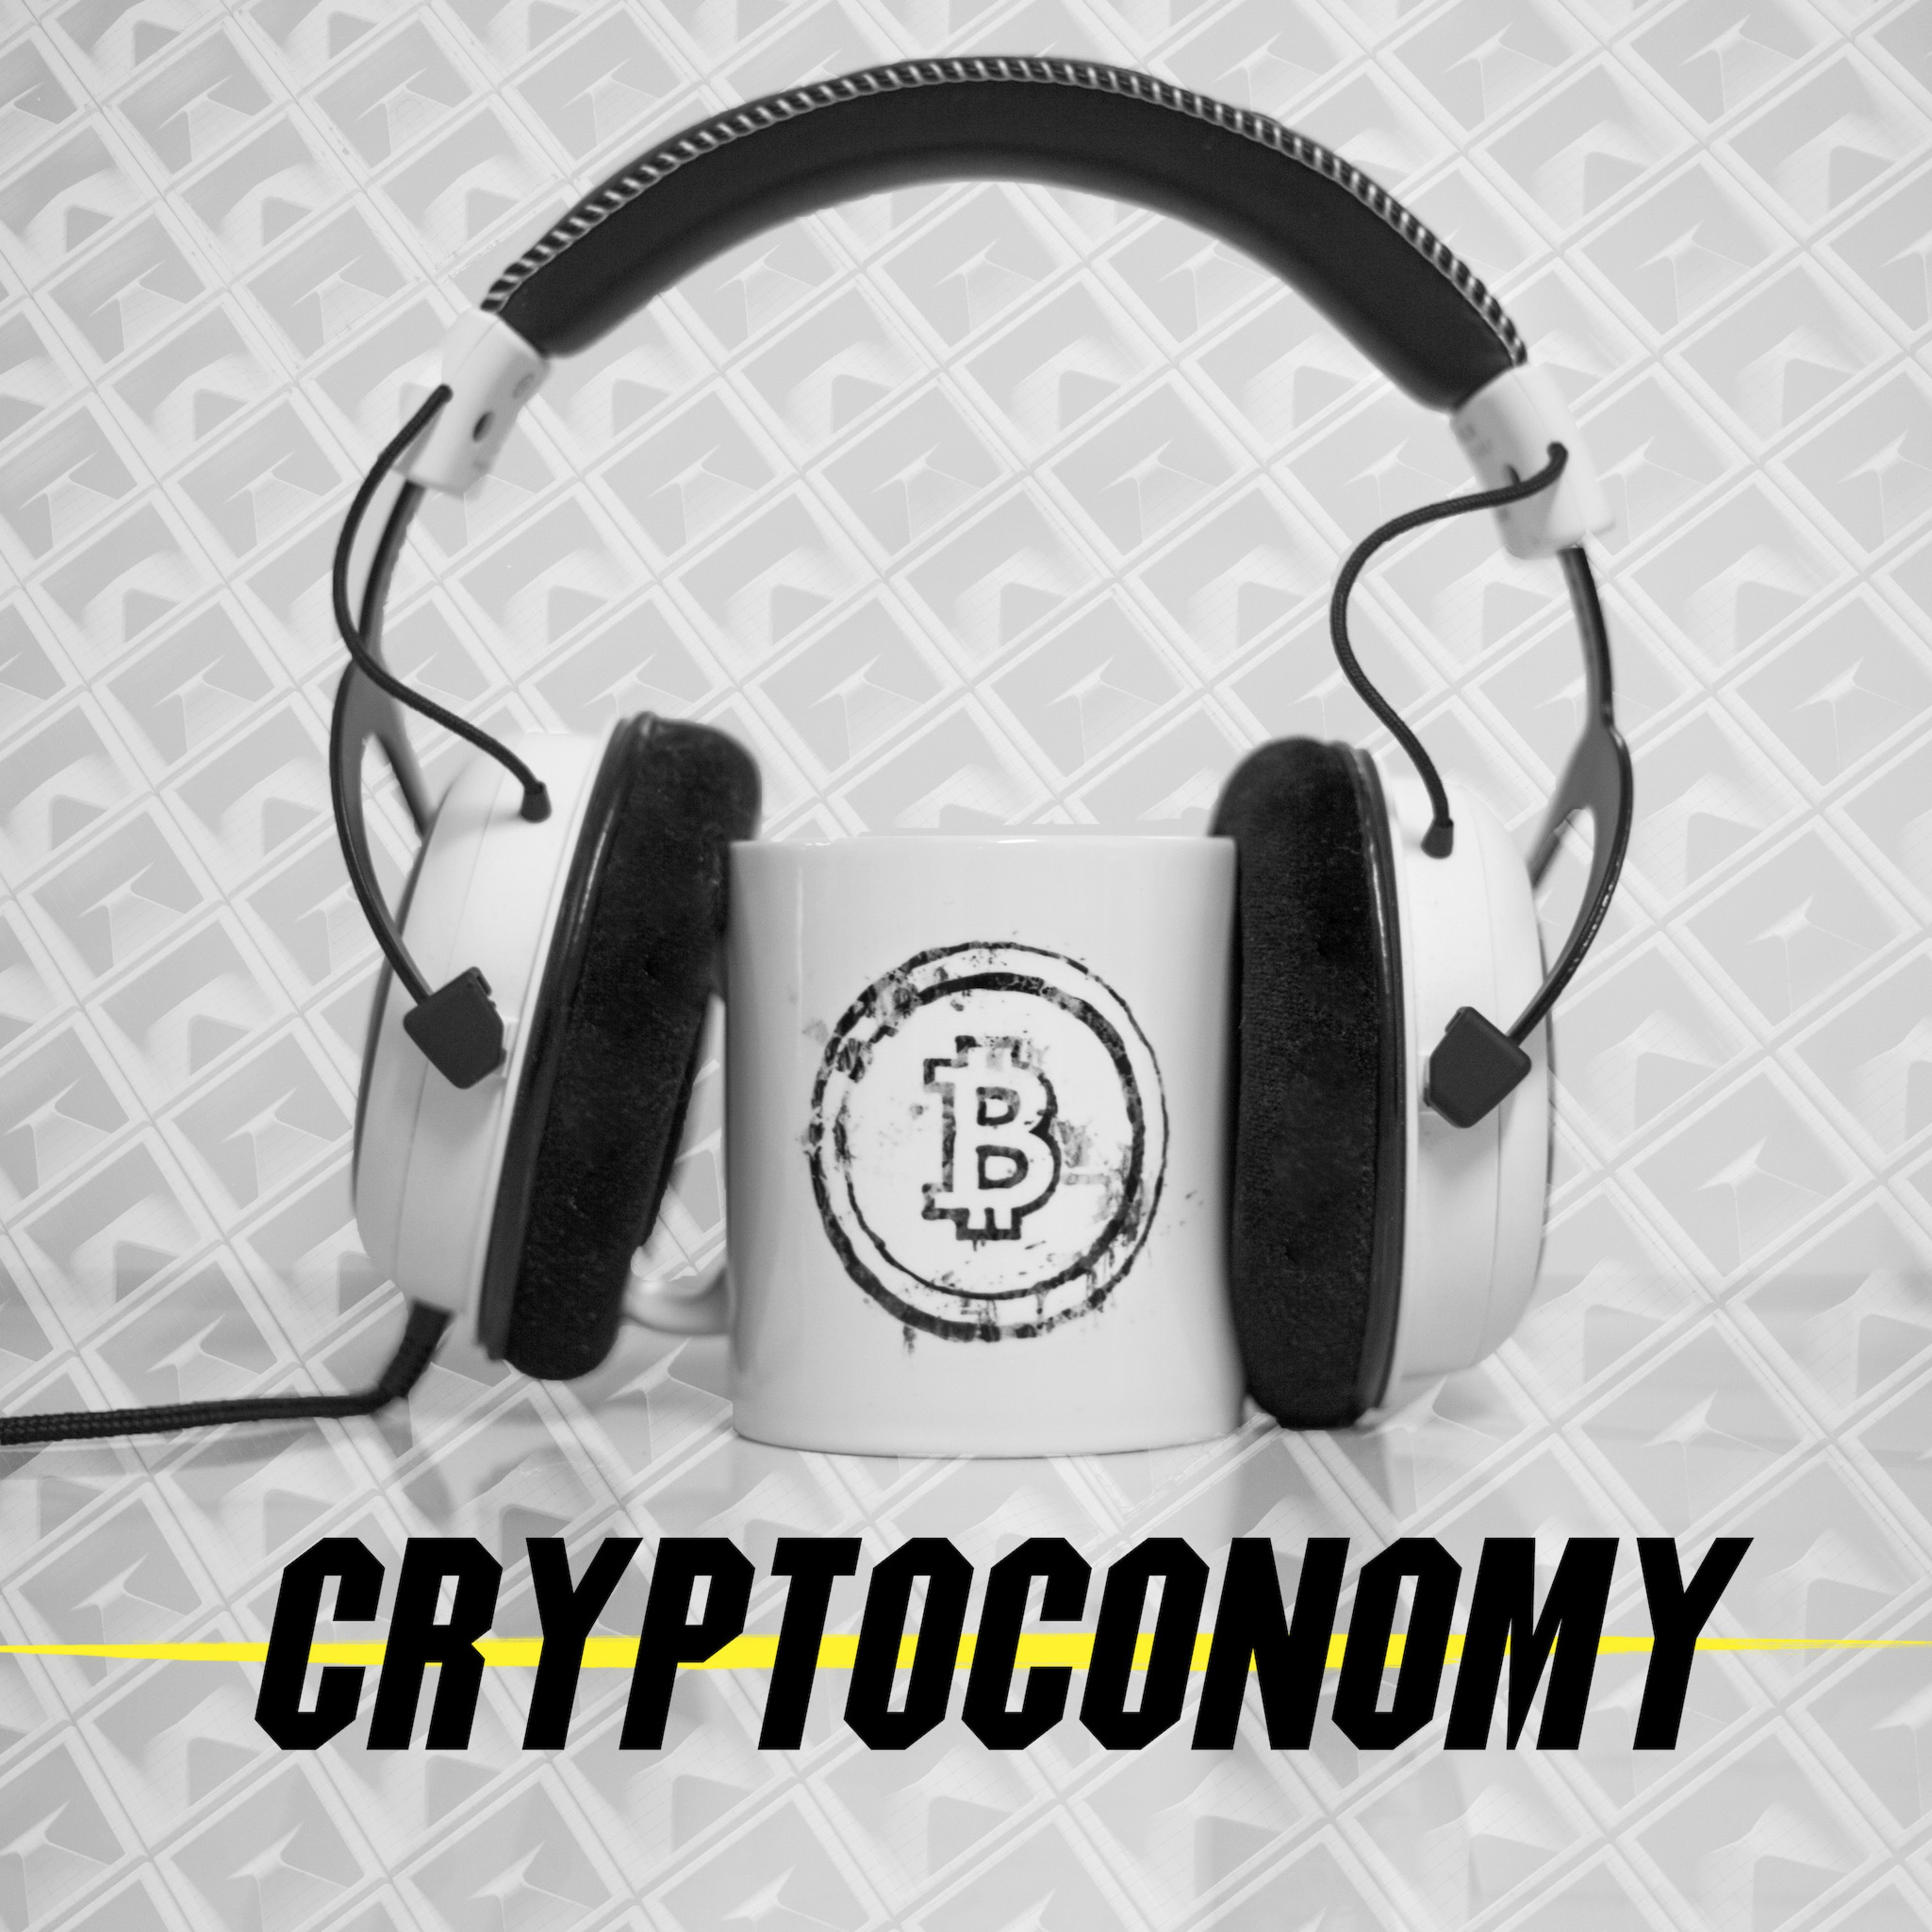 CryptoQuikRead_193 - The Cryptocurrency Phenomenon [Part 8]